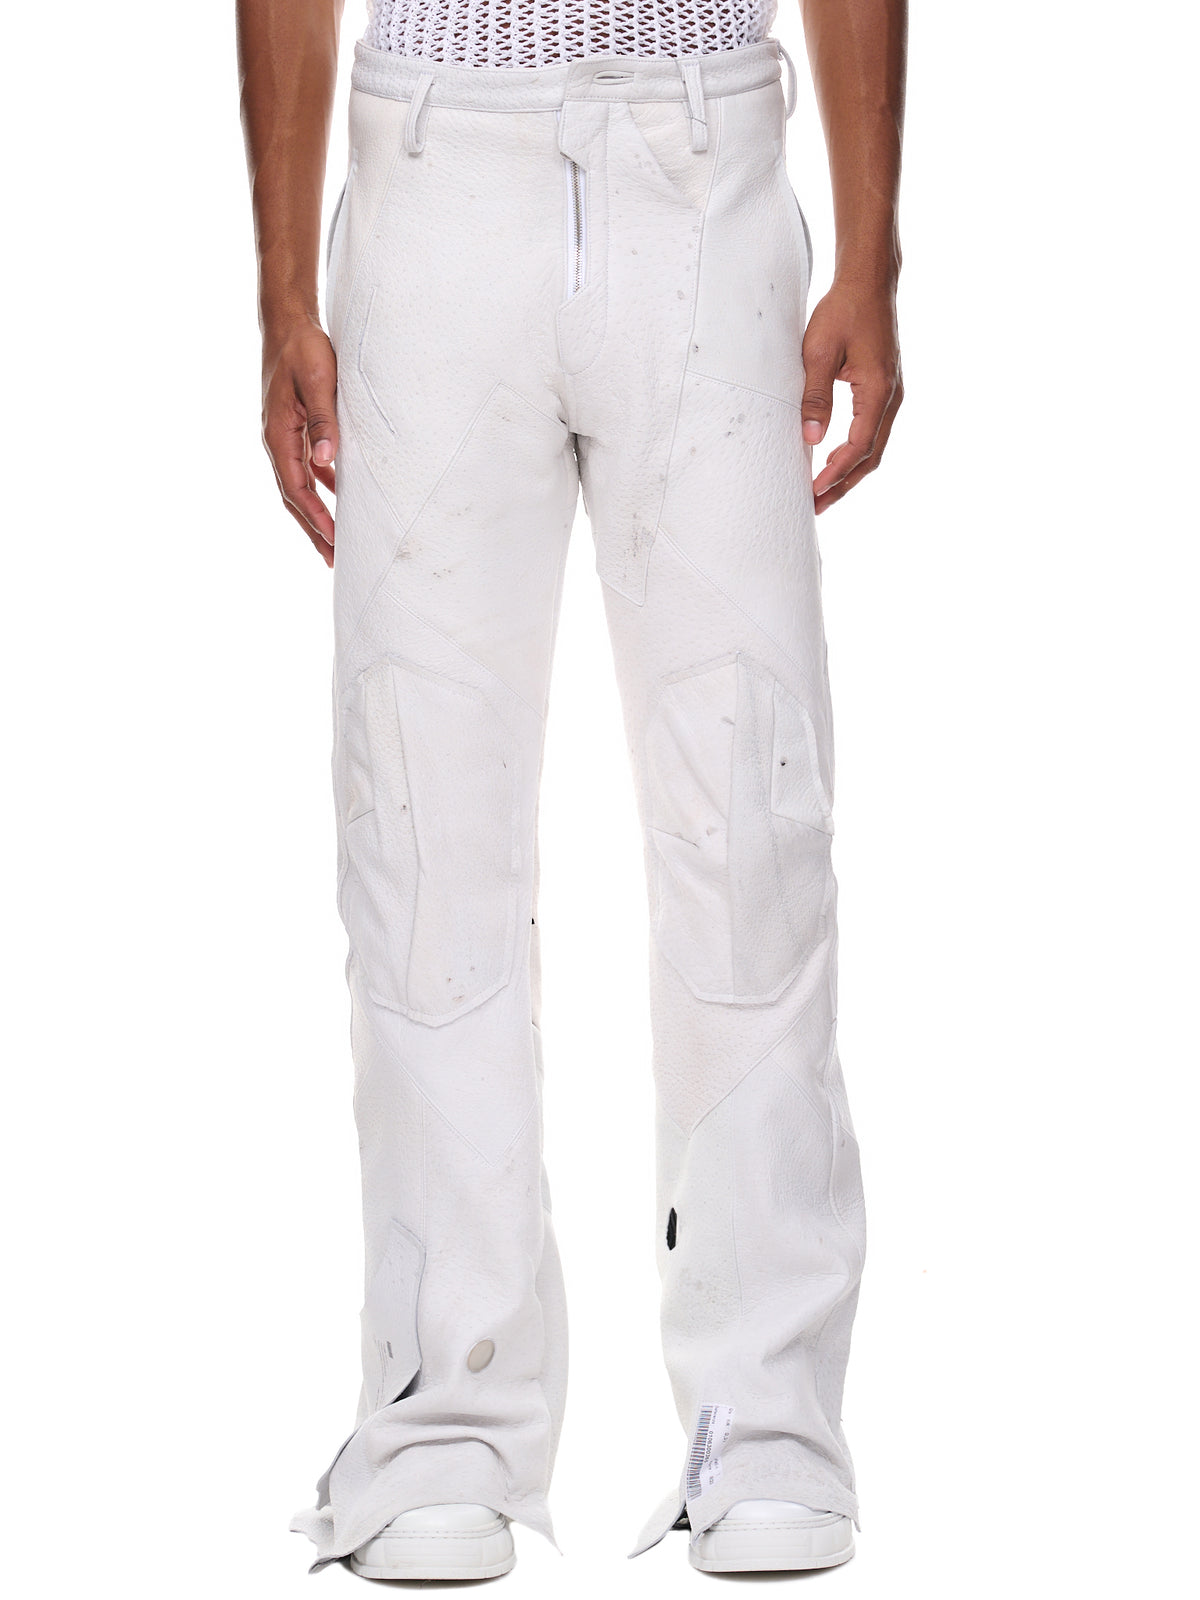 Peccary Biker Trousers (PCCR-31-WH-WHITE)